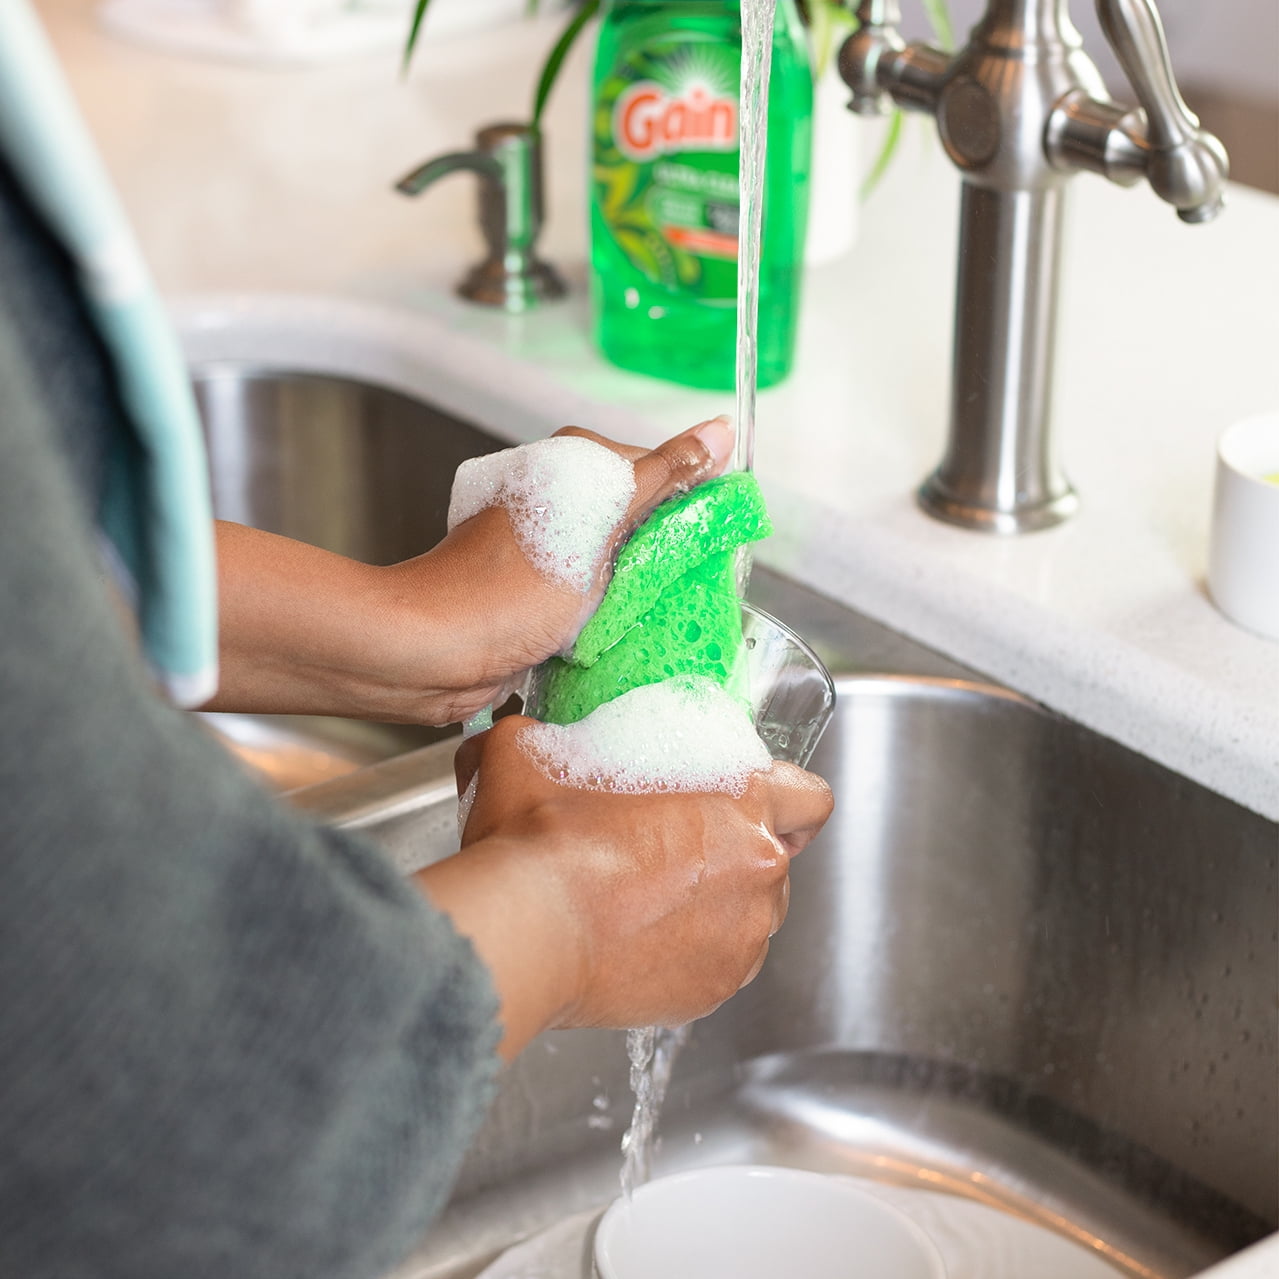 Gain Ultra Dishwashing Liquid Dish Soap, Original Scent, 90.0 fl oz